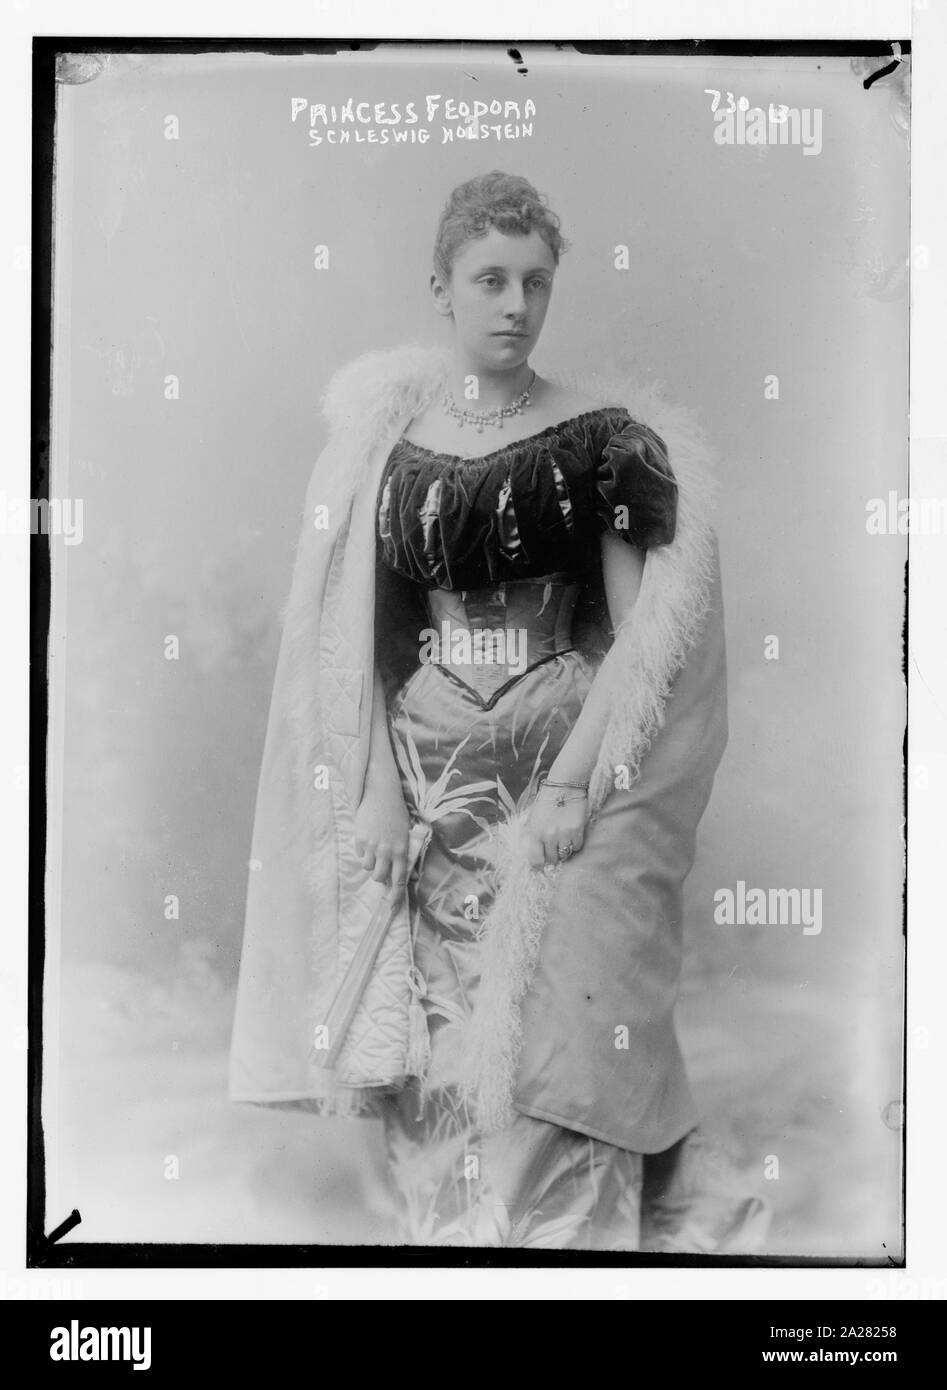 La princesse Fedora, Schleswig Holstein Banque D'Images